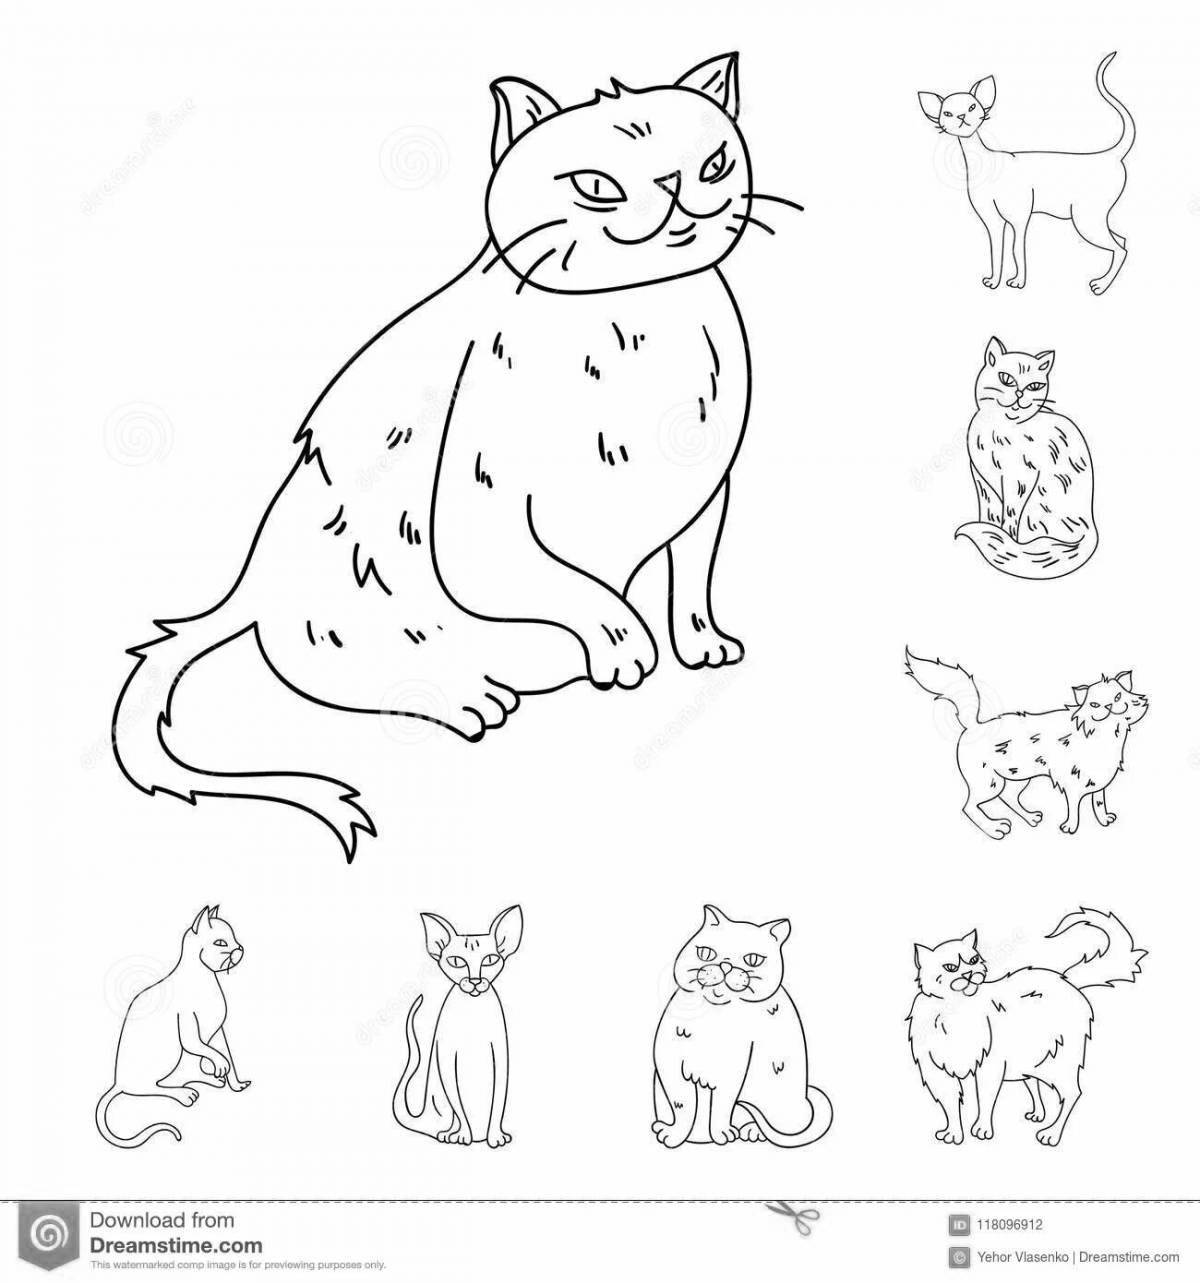 Majestic coloring page породы кошек с именами